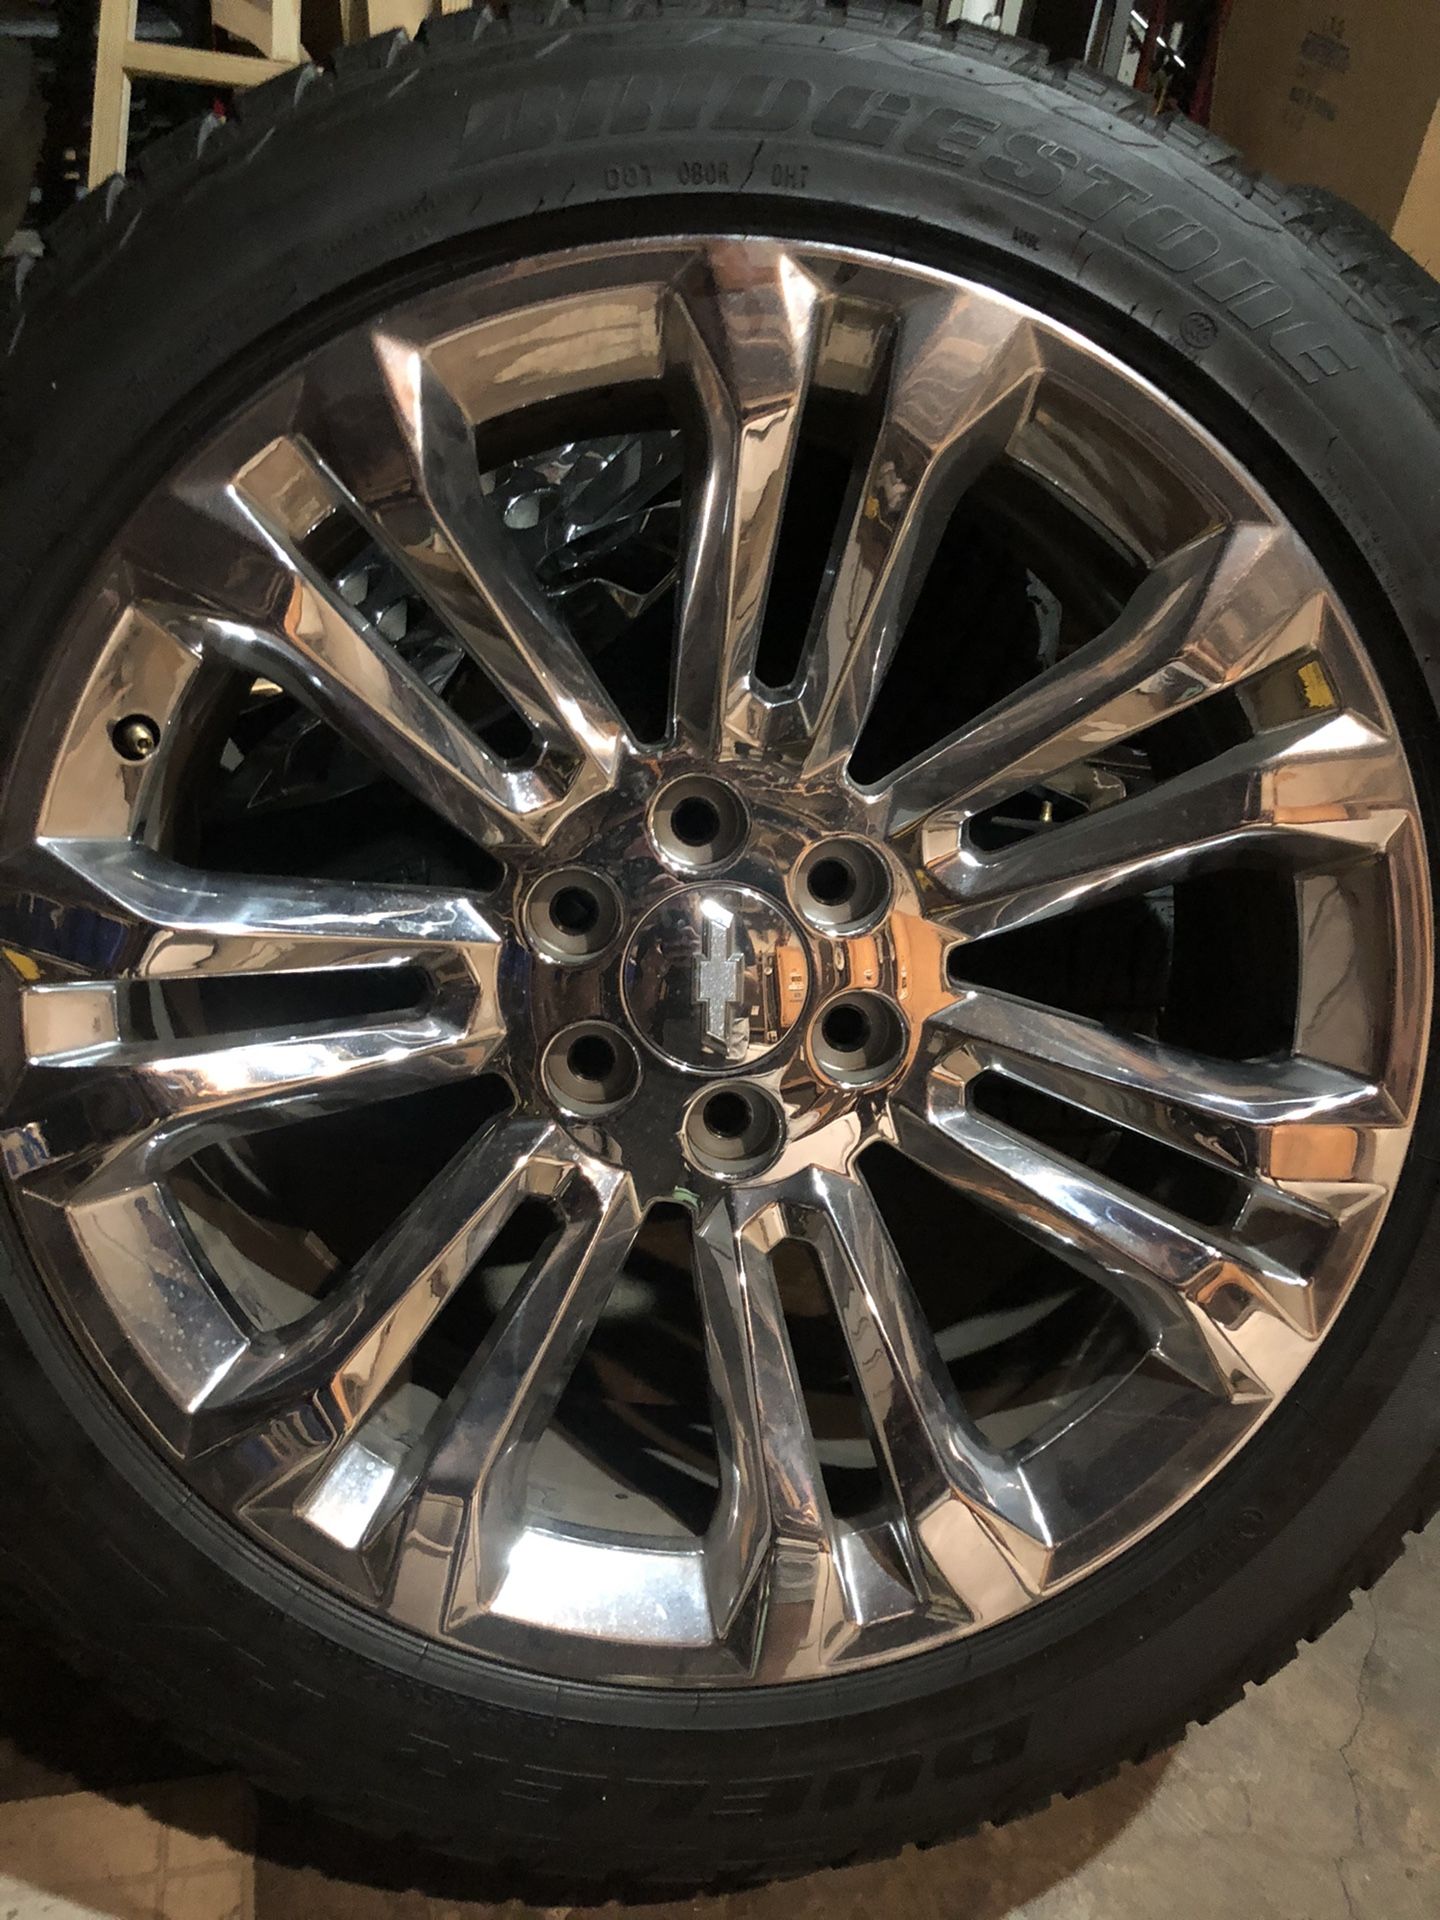 22” original Chevy wheels